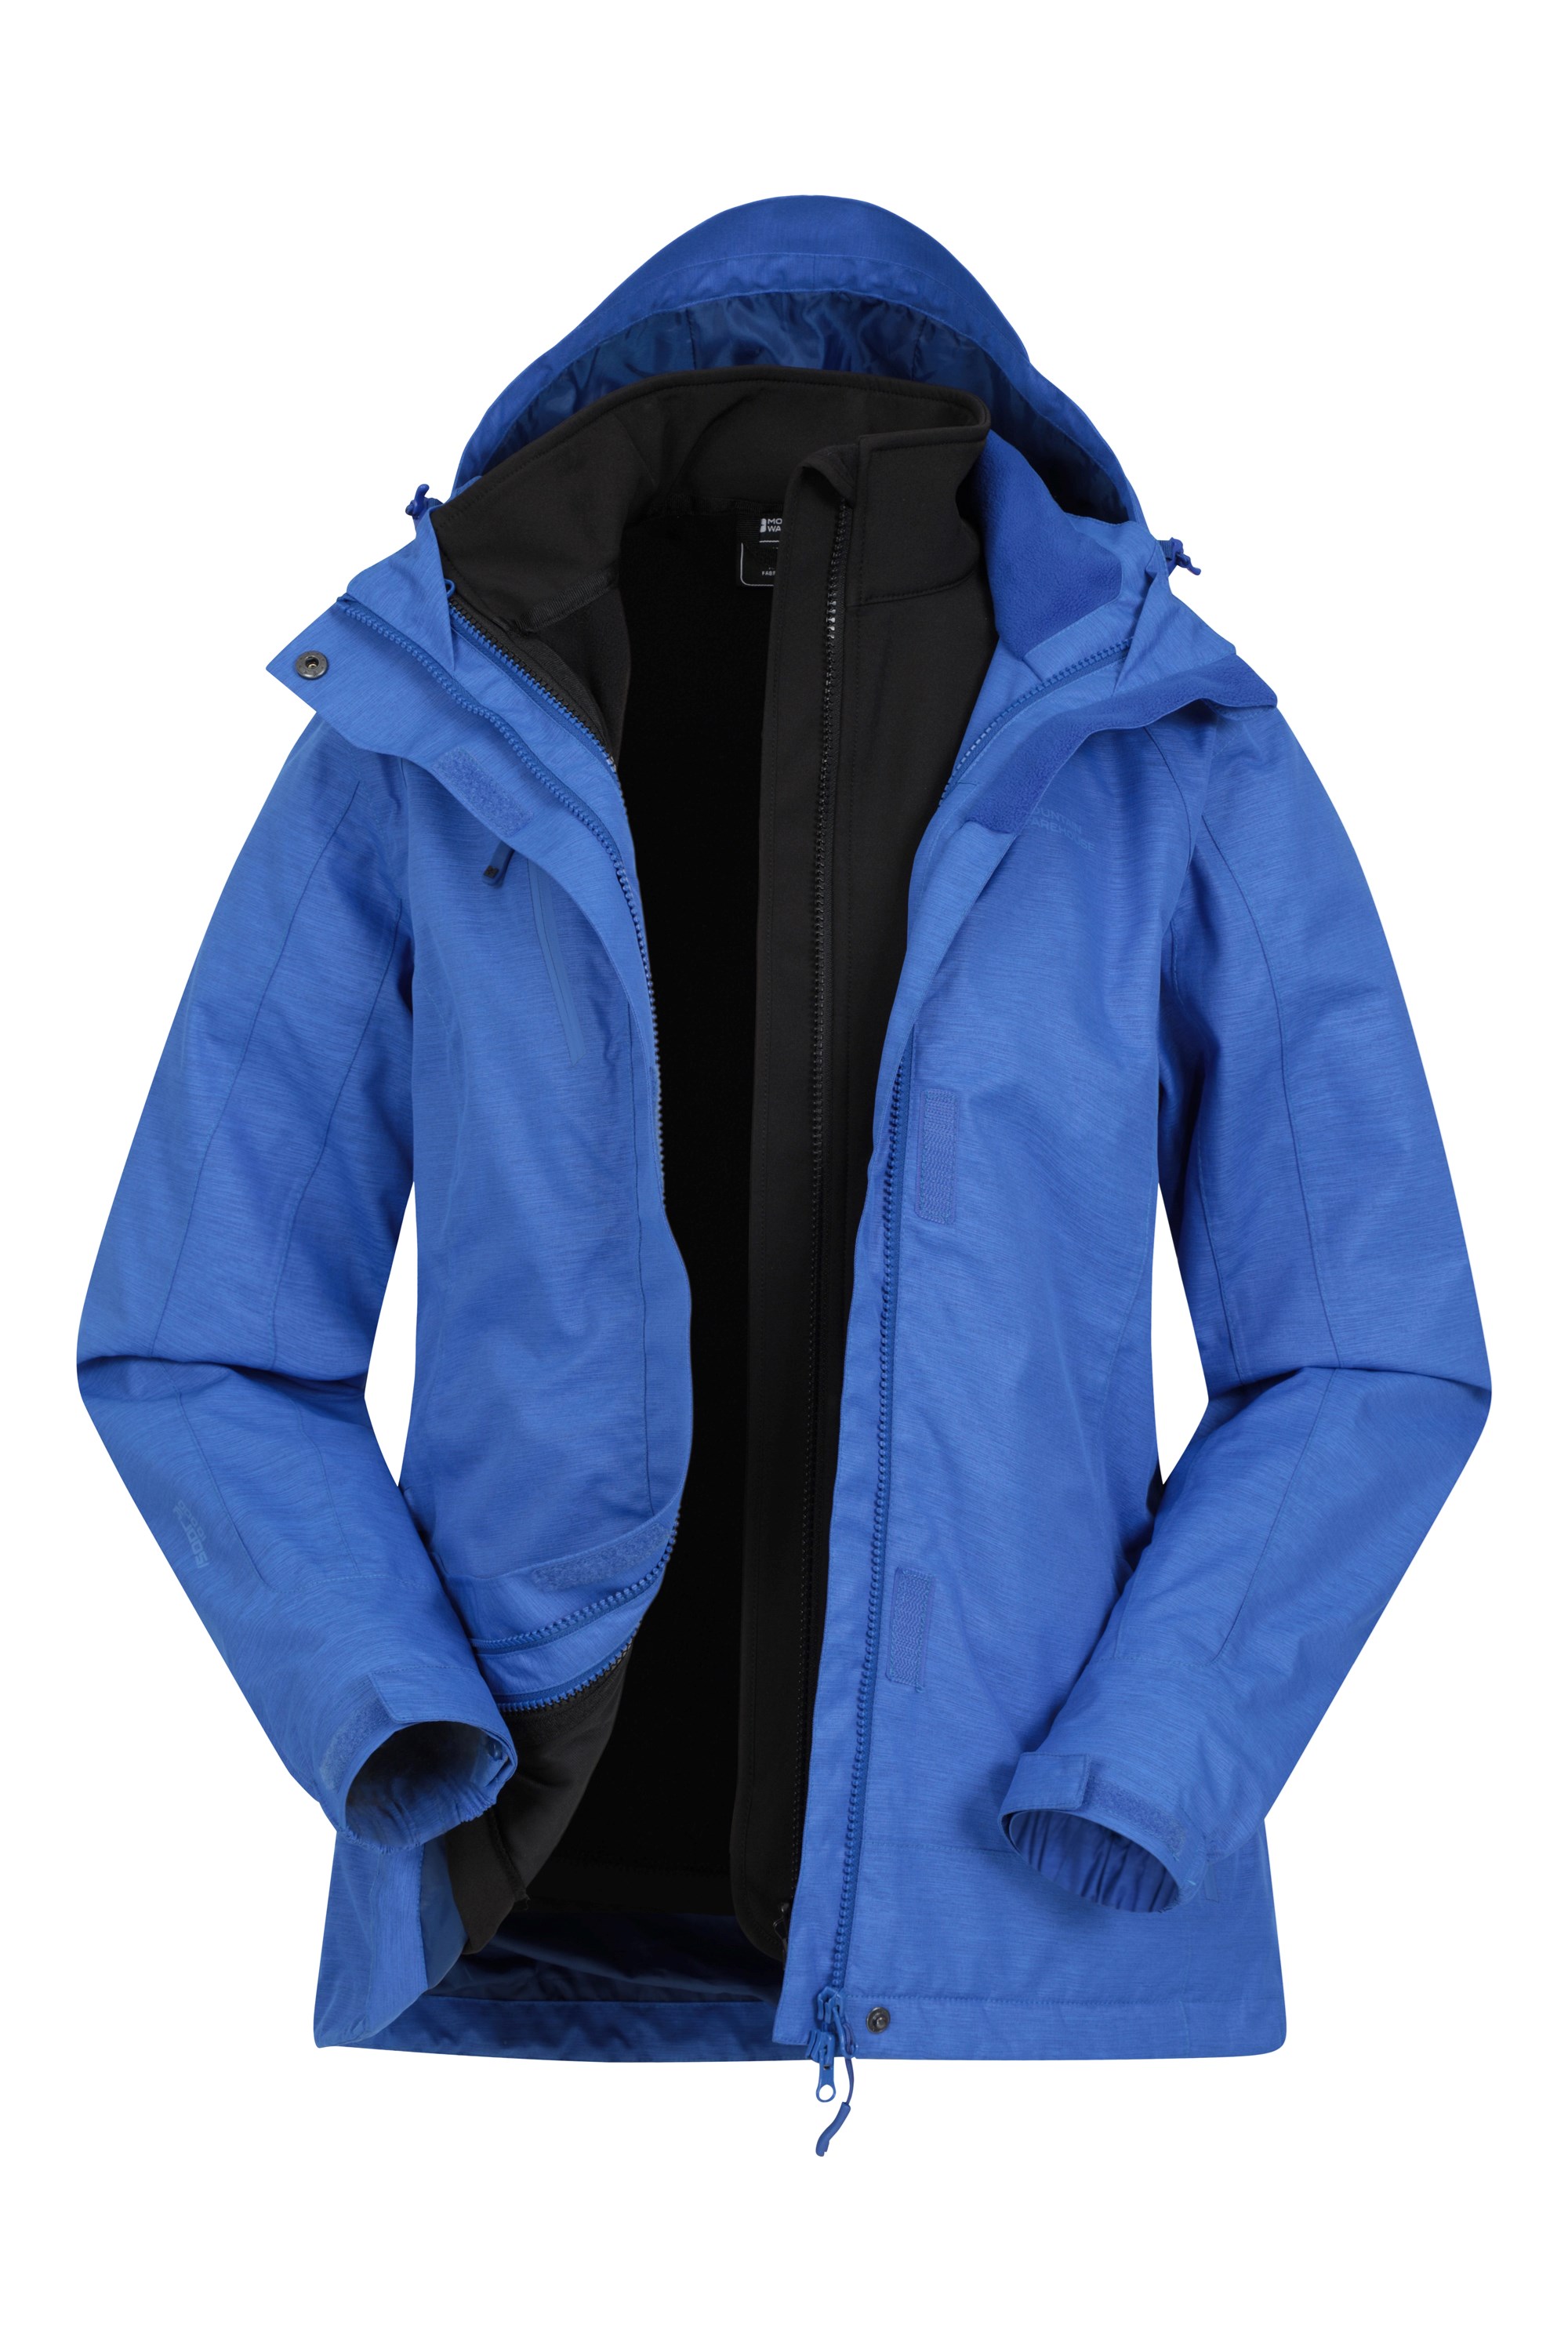 Mapamyumco Women's Ski Jacket 3-in-1 Waterproof Warm Winter Coat with Inner Softshell Thermal Jacket for Rain Snow Hiking 